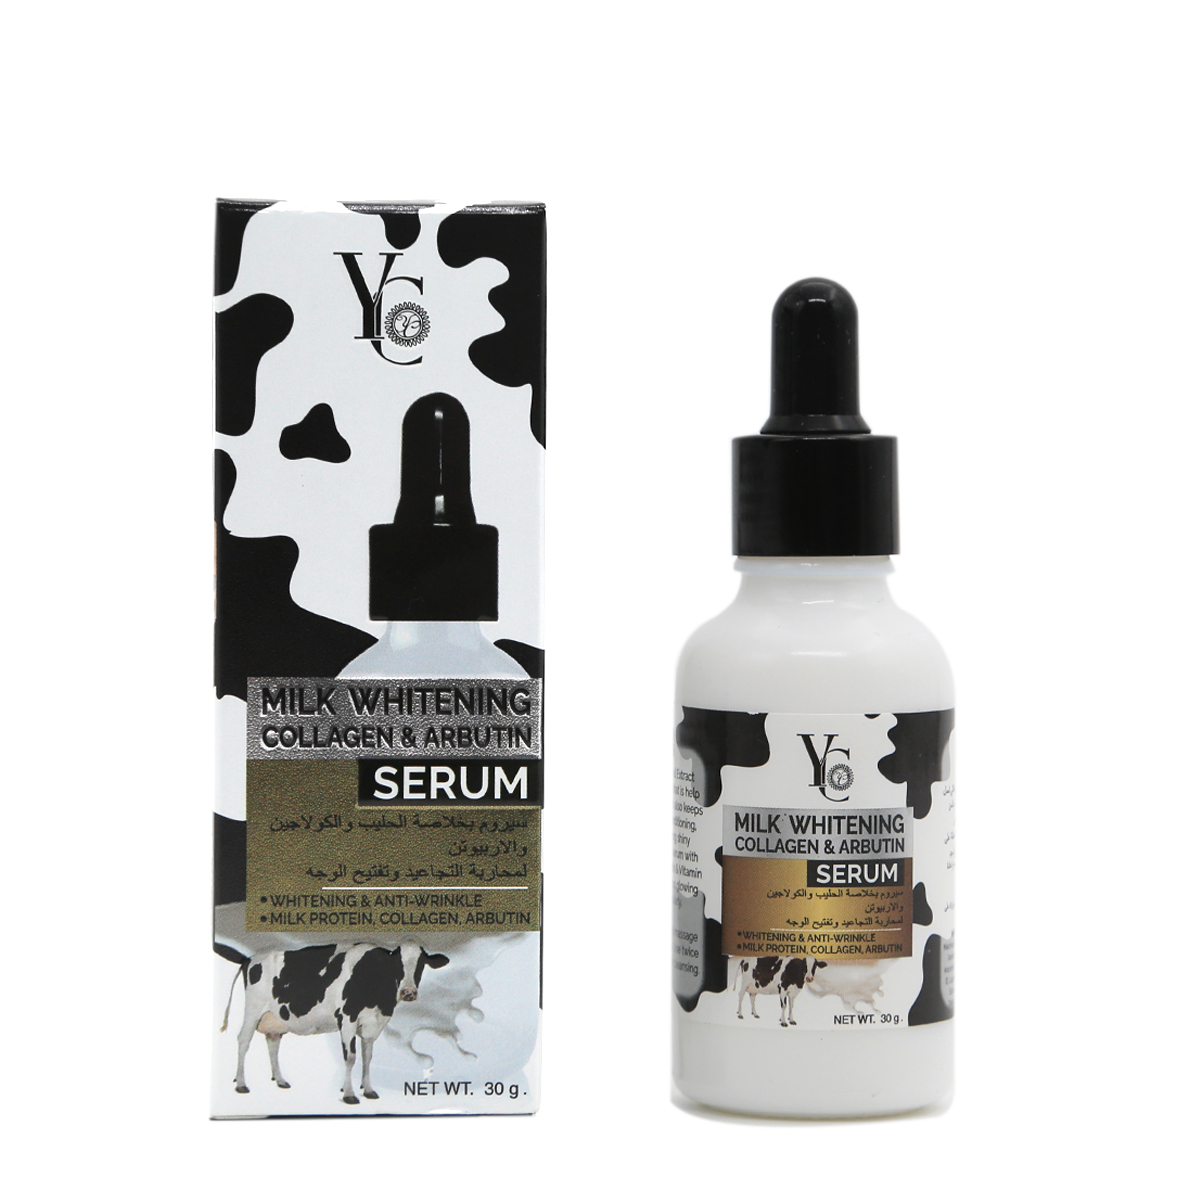 149-8859362509599-Yong Chin Milk Whitening Collagen & Arbutin Serum 30g